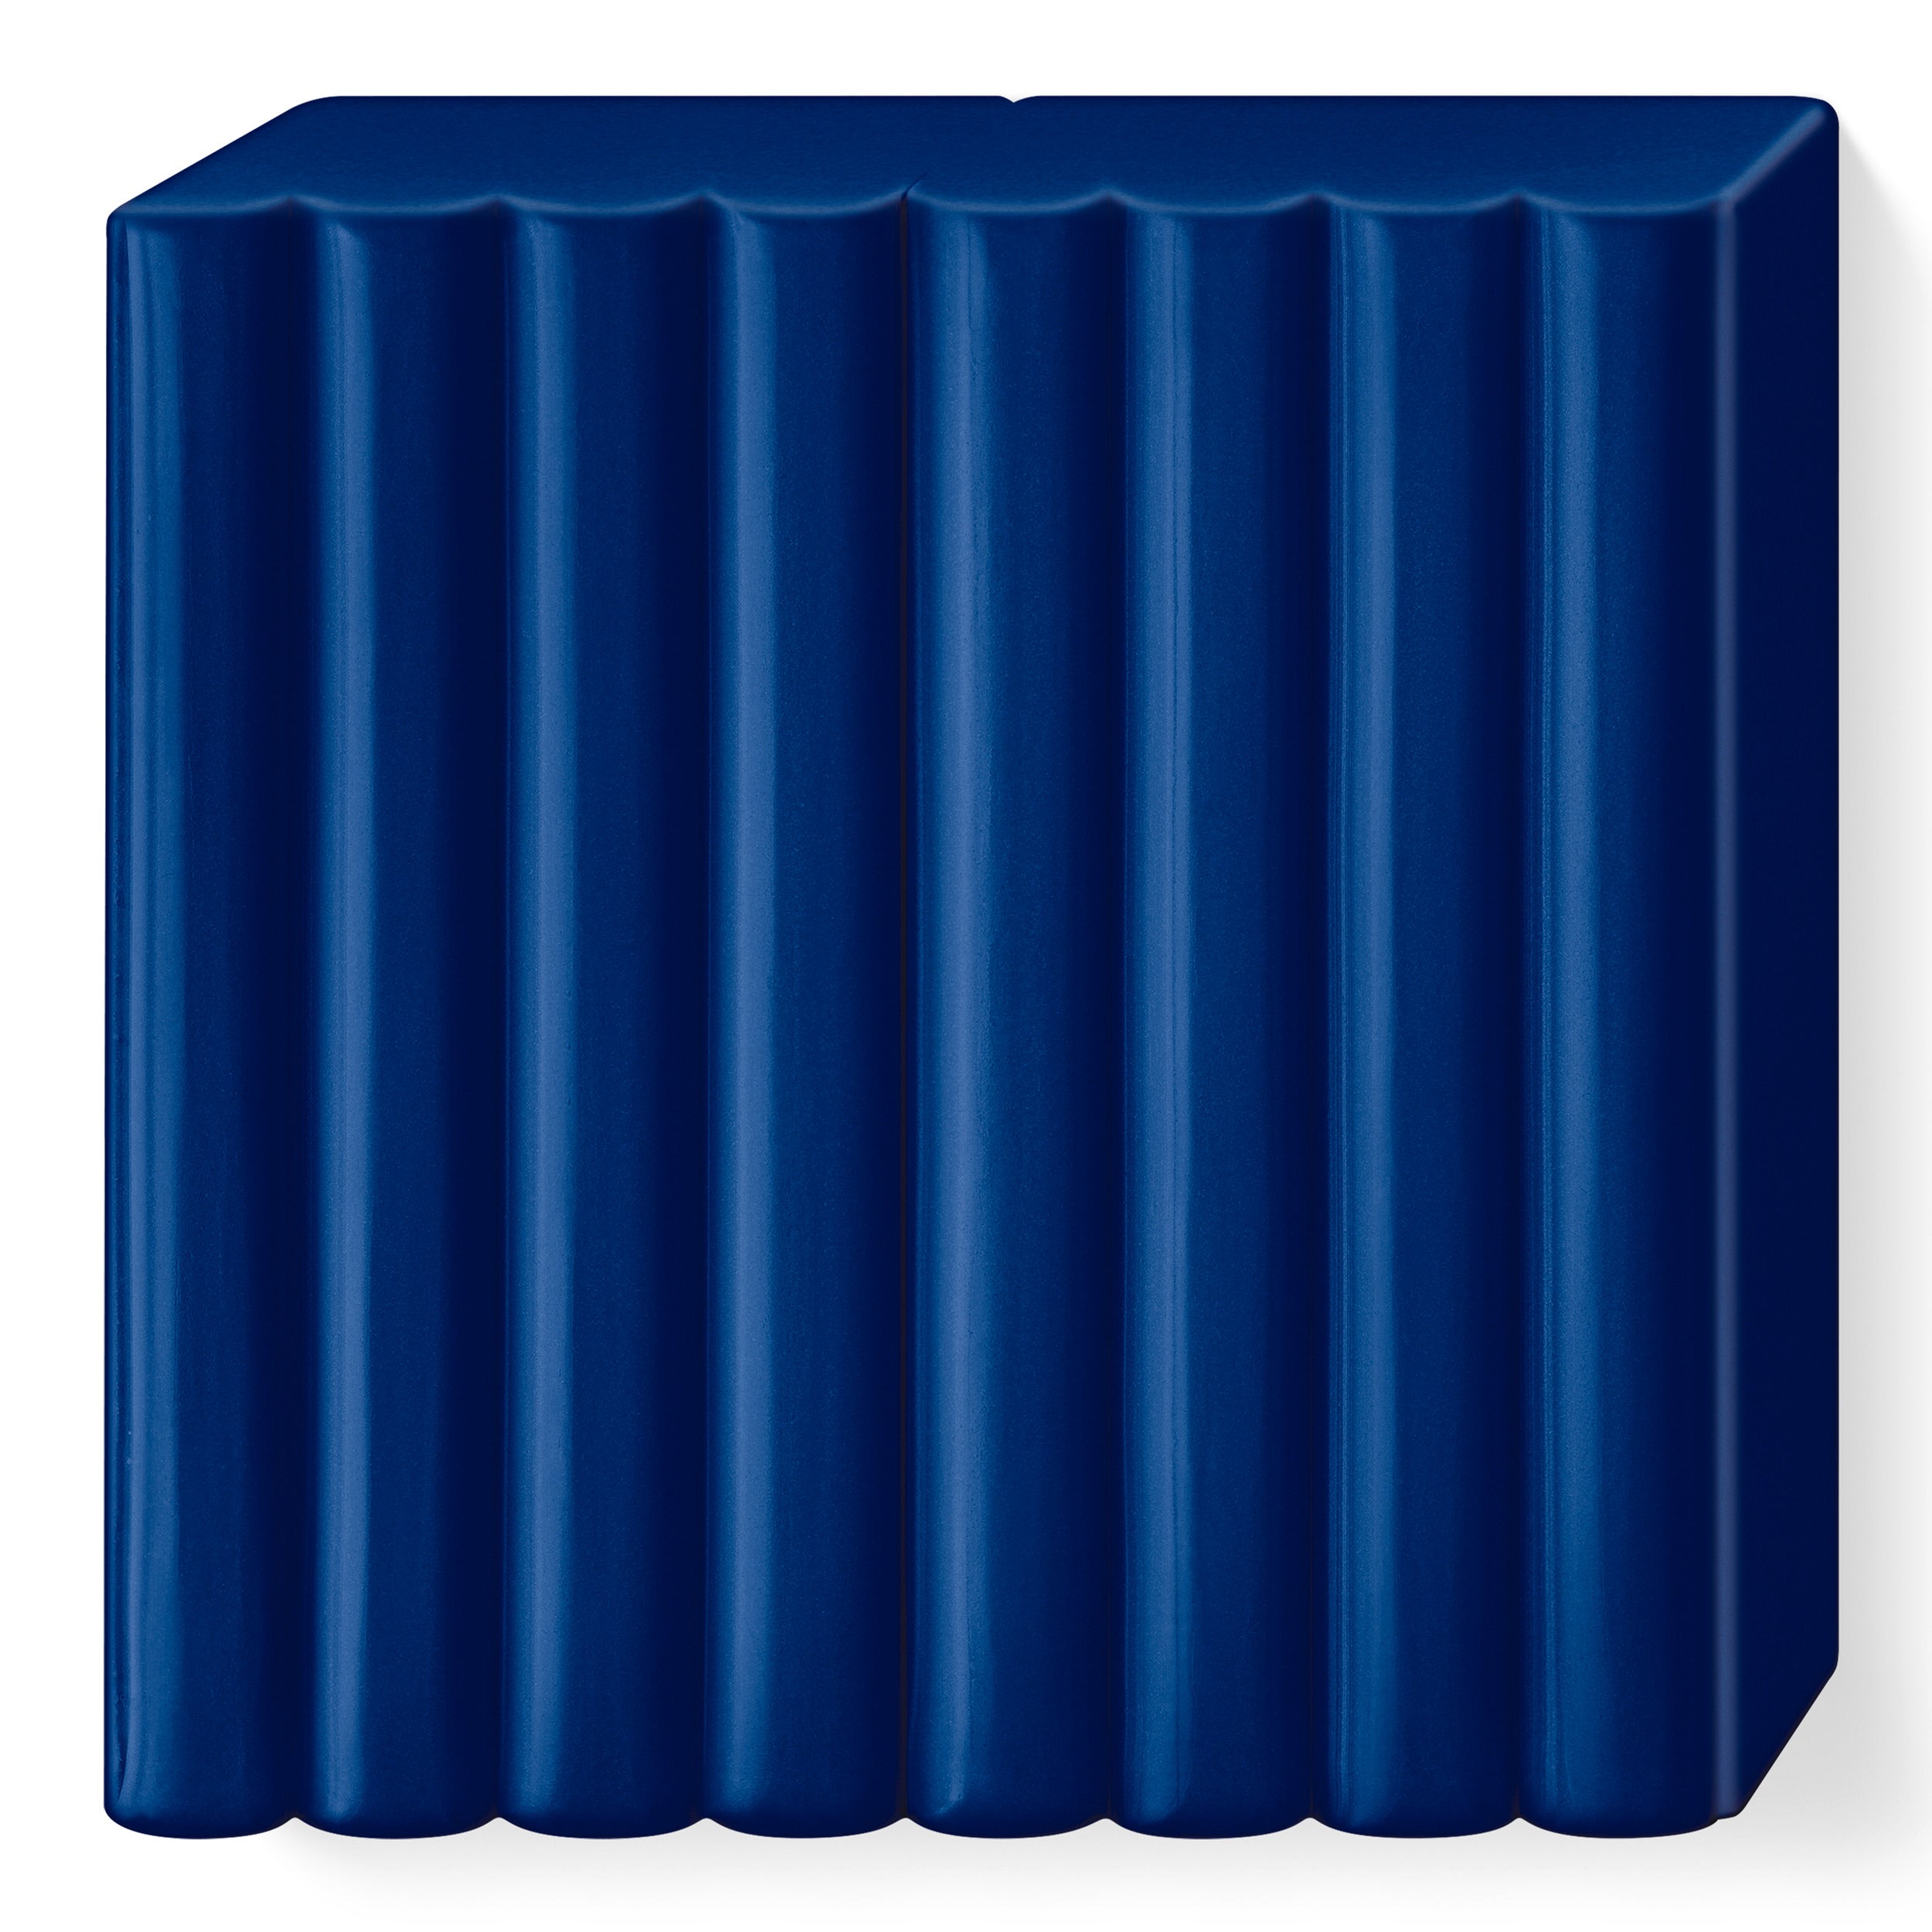 Fimo Soft Polymer Clay Standard Block 57g (2oz) - Windsor Blue